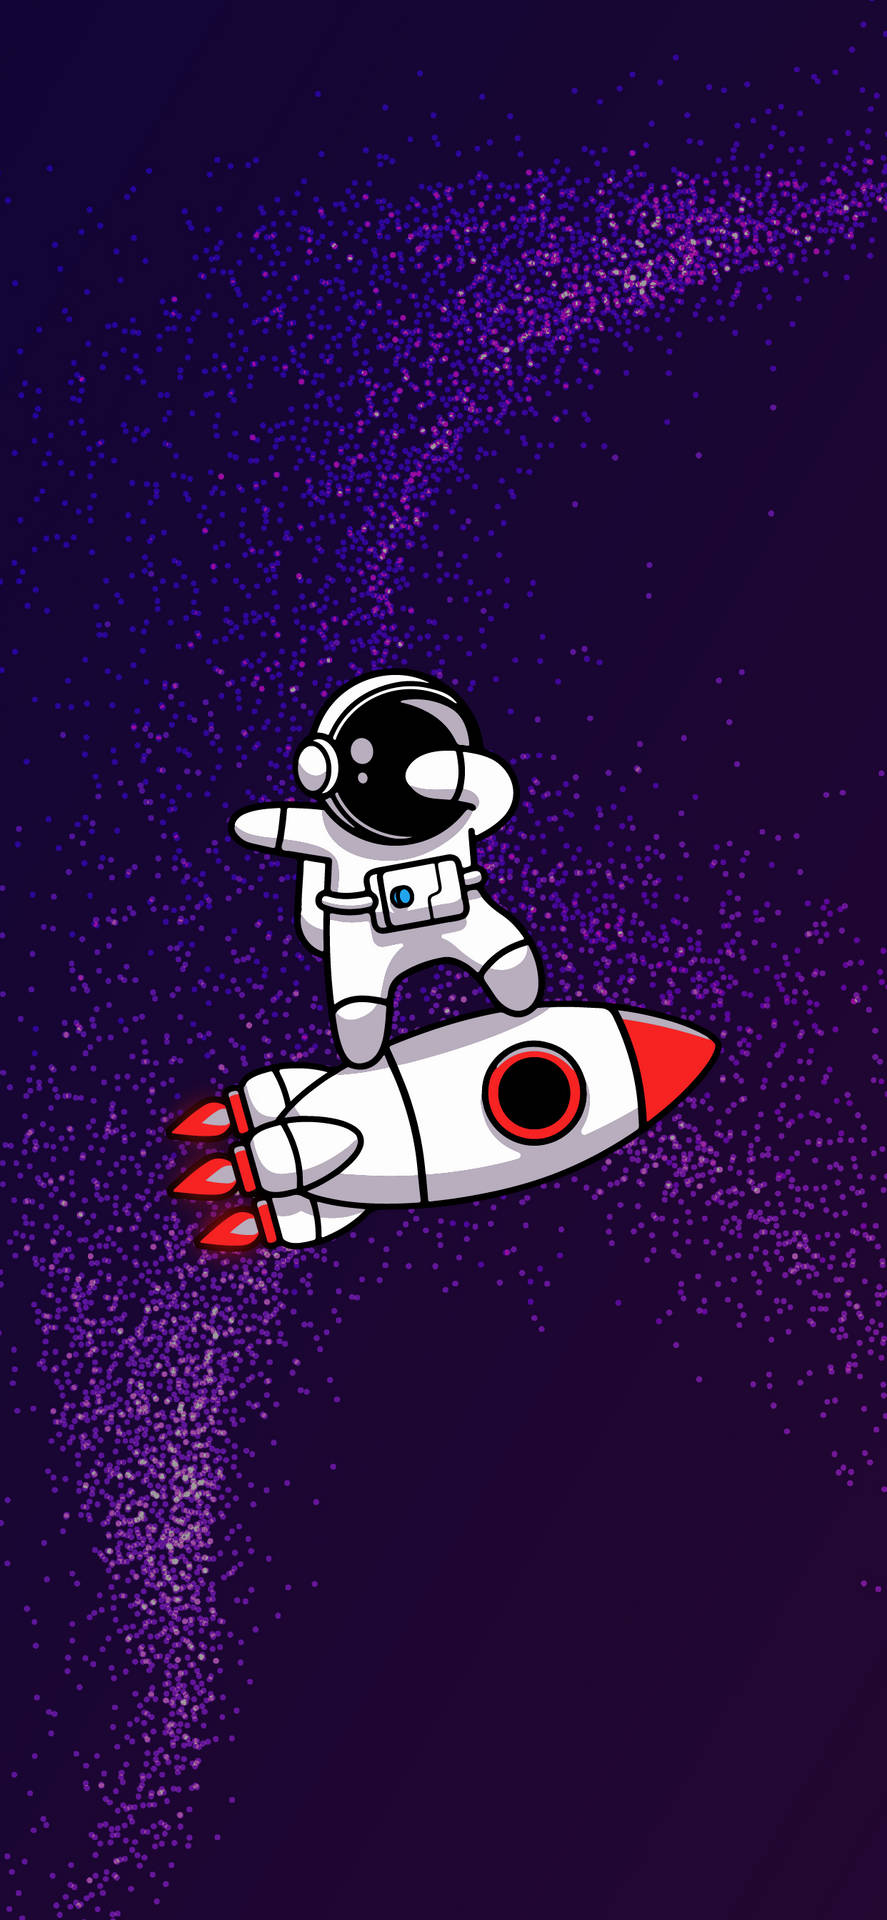 Cartoon Astronaut Riding A Rocket Ship